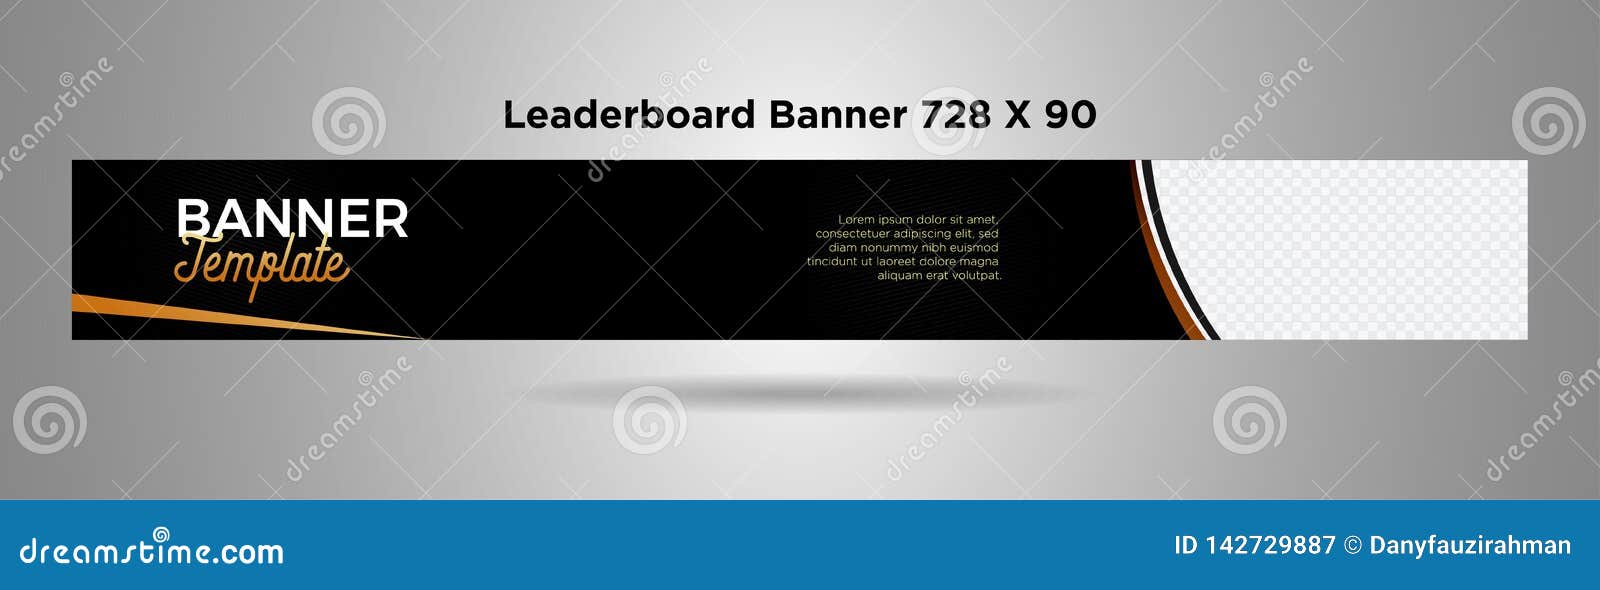 Leaderboard Banner 728x90 Black Gold Simple Design Vector 03 Stock Illustration Illustration Of 728x90 Geometric 142729887